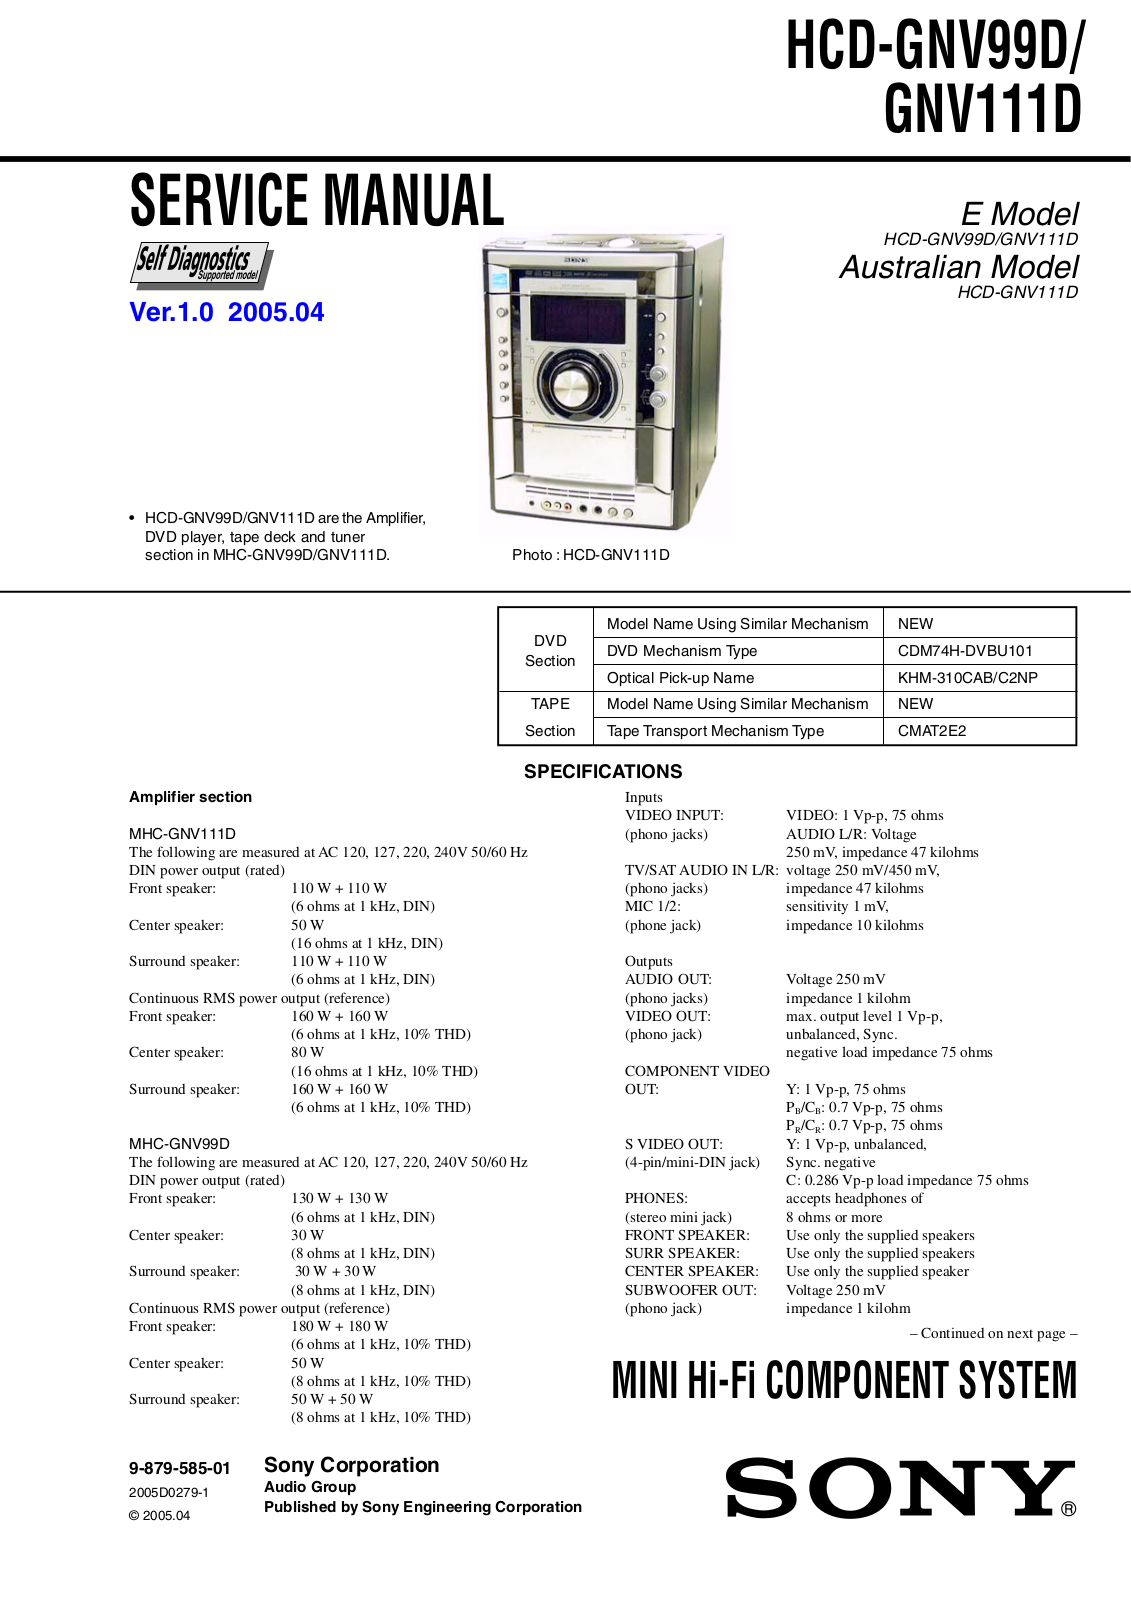 Sony HCD-GNV99D, HCD-GNV111D Service Manual